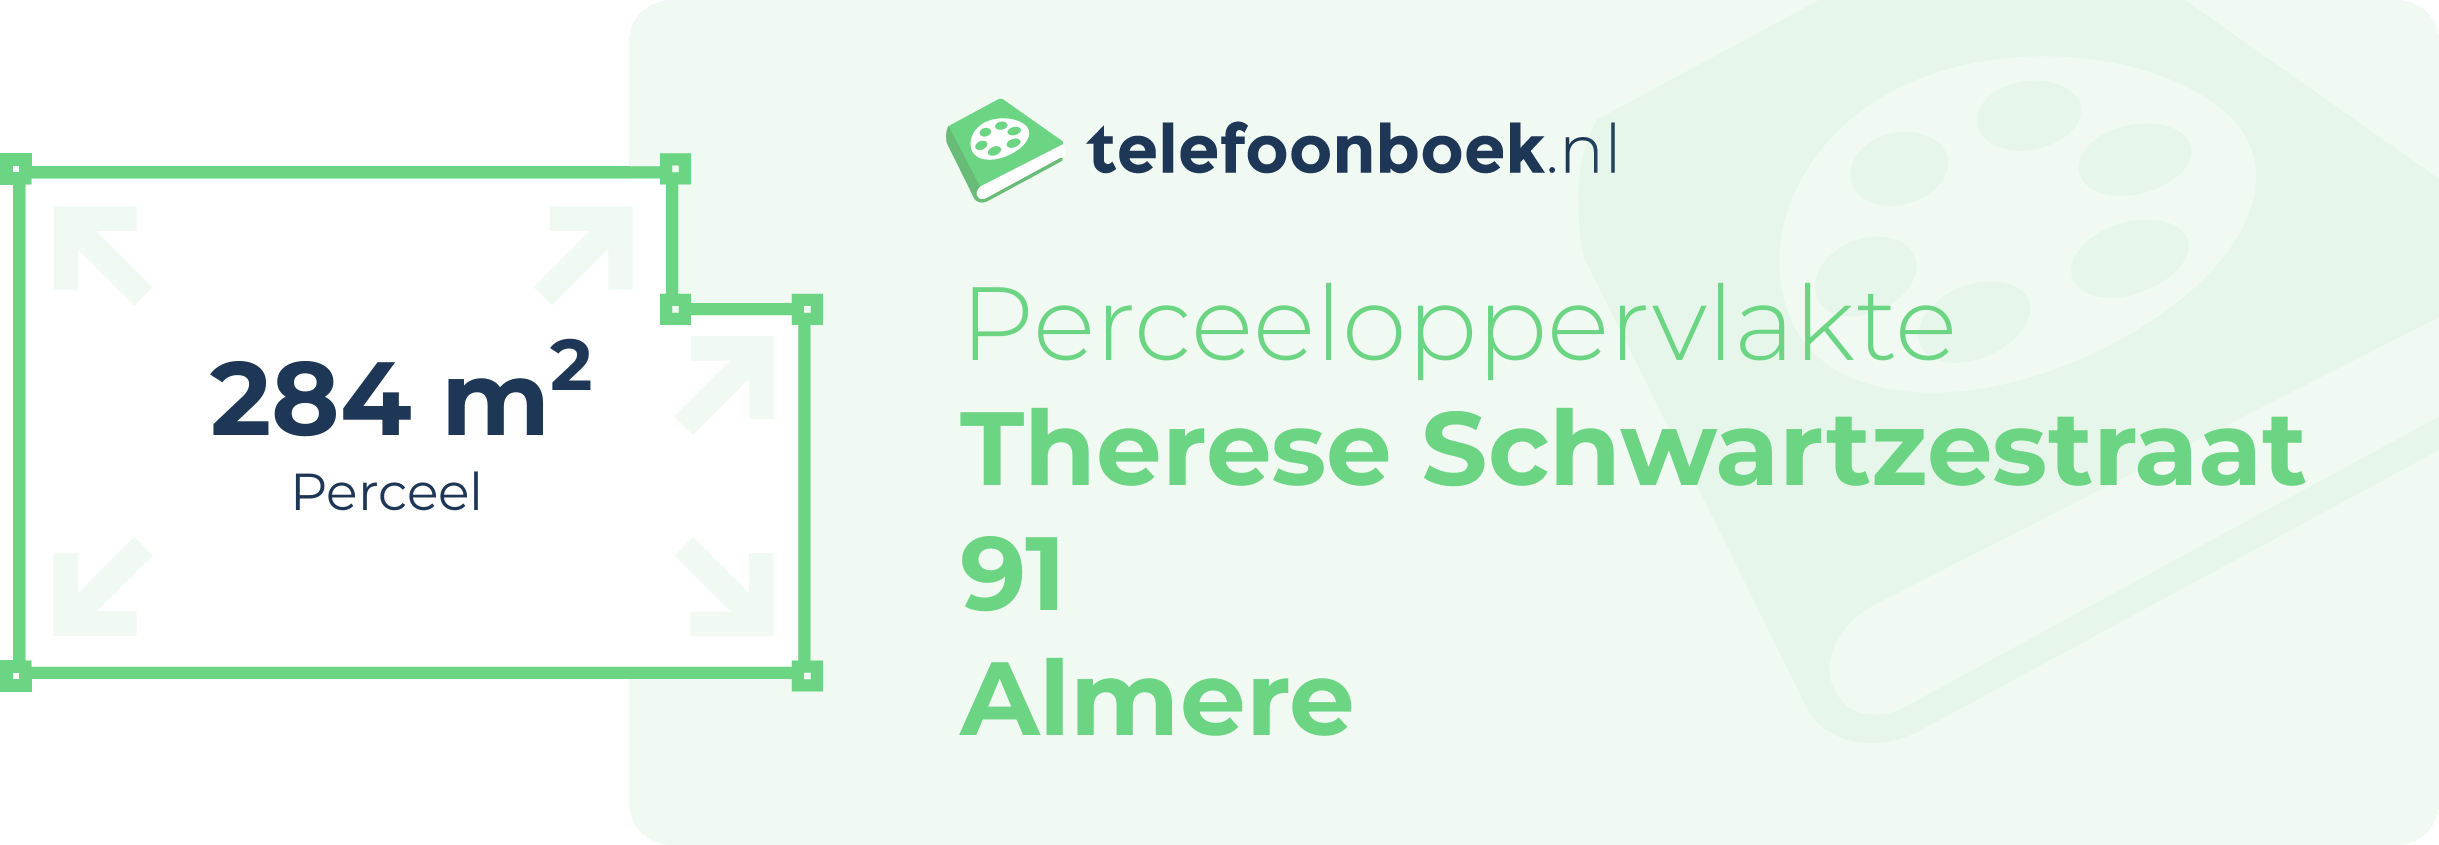 Perceeloppervlakte Therese Schwartzestraat 91 Almere